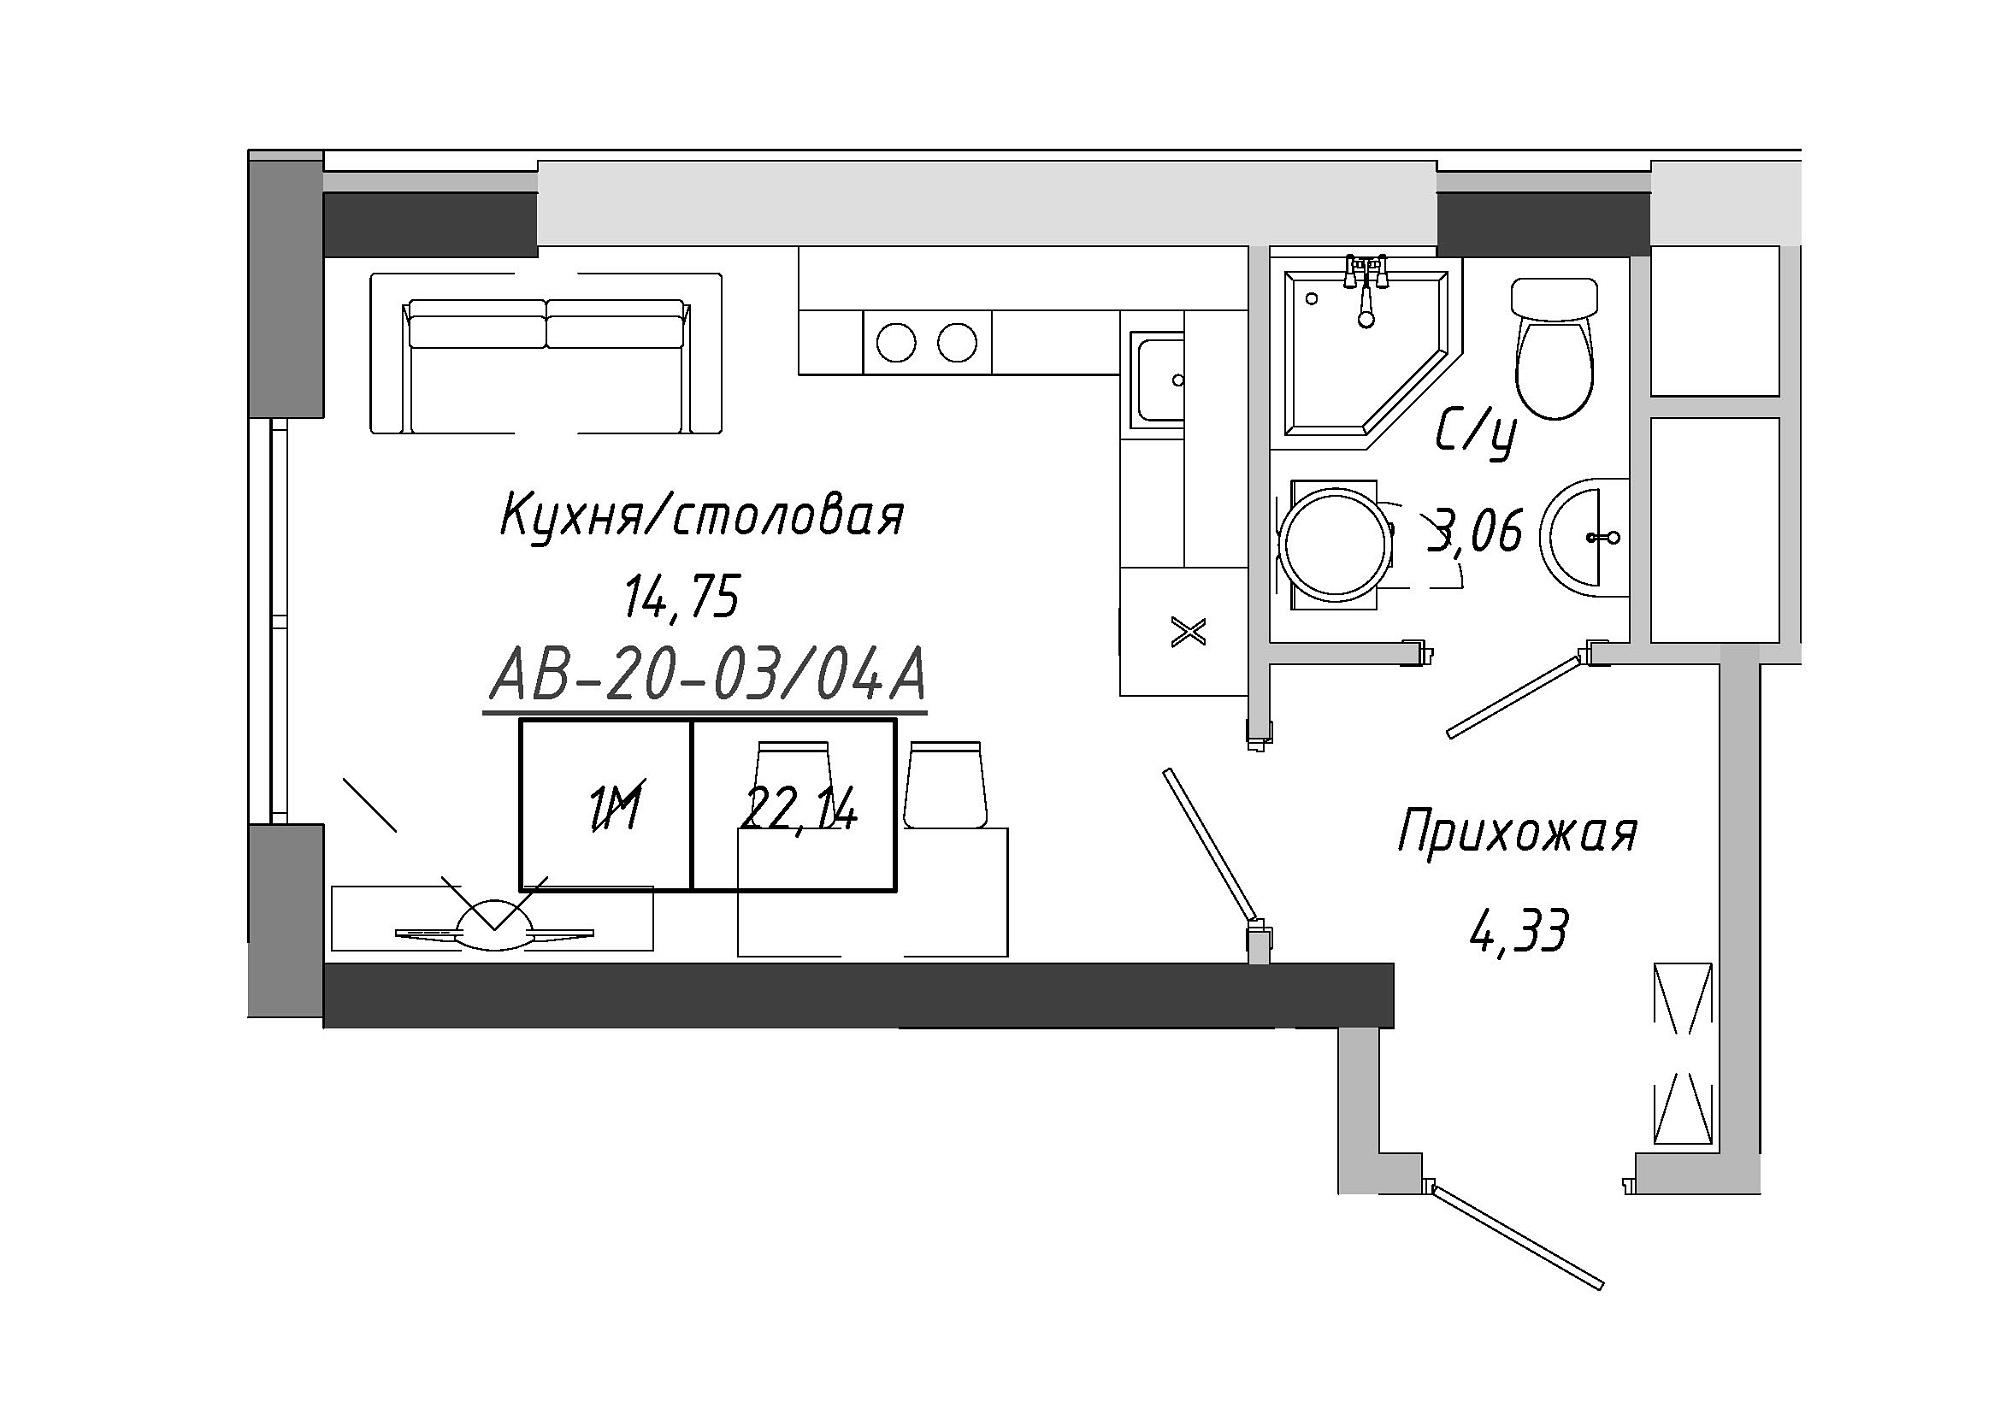 Planning Smart flats area 22.14m2, AB-20-03/0004а.